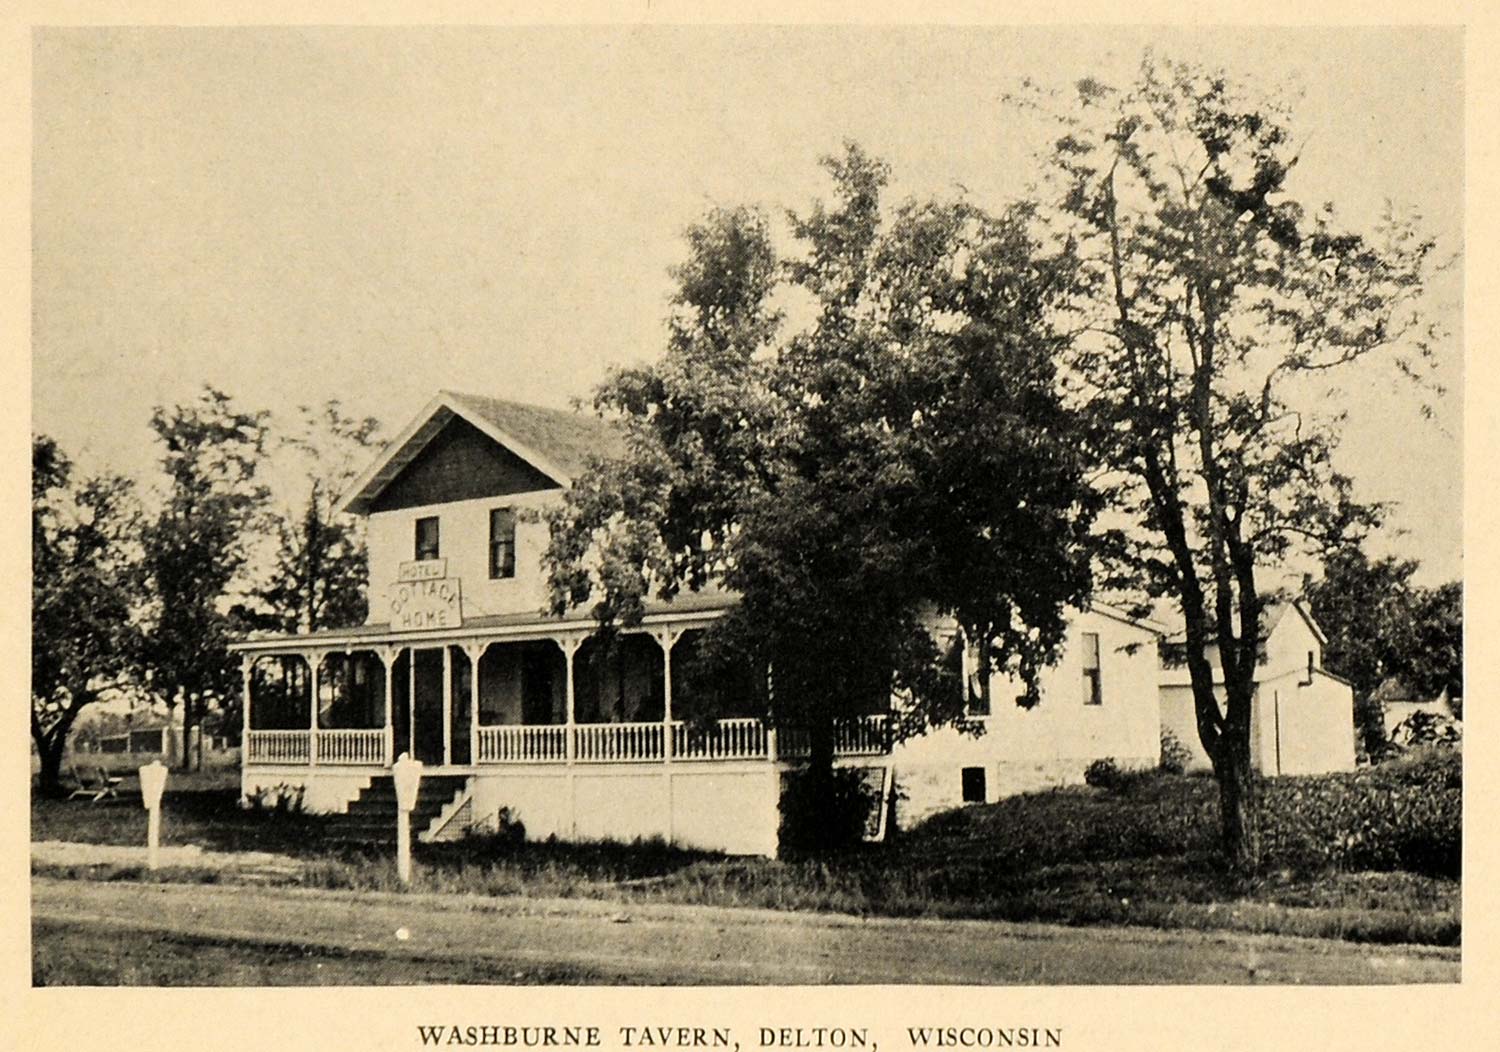 1926 Washburne Tavern Delton Wisconsin Hotel Inn Print ORIGINAL HISTORIC AT1